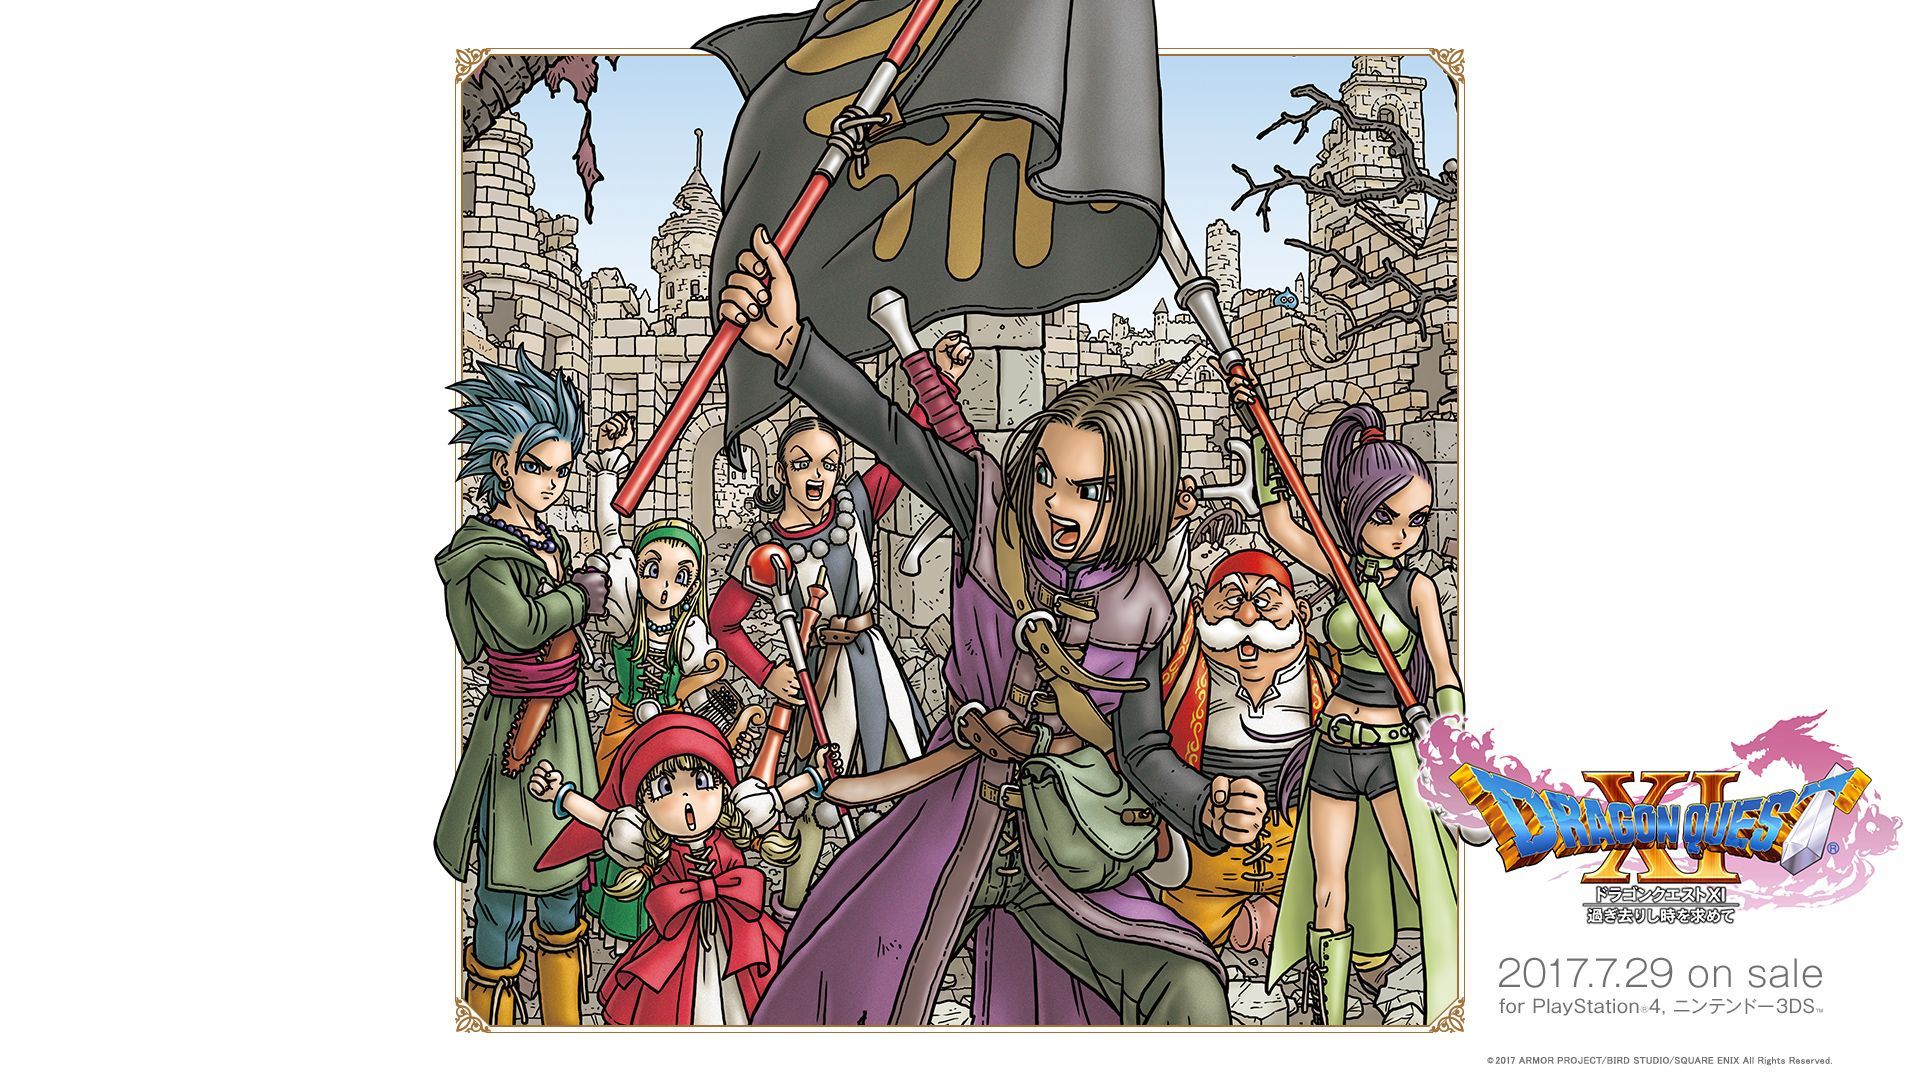 Does anyone have a wallpaper (desktop) of the Akira Toriyama cover